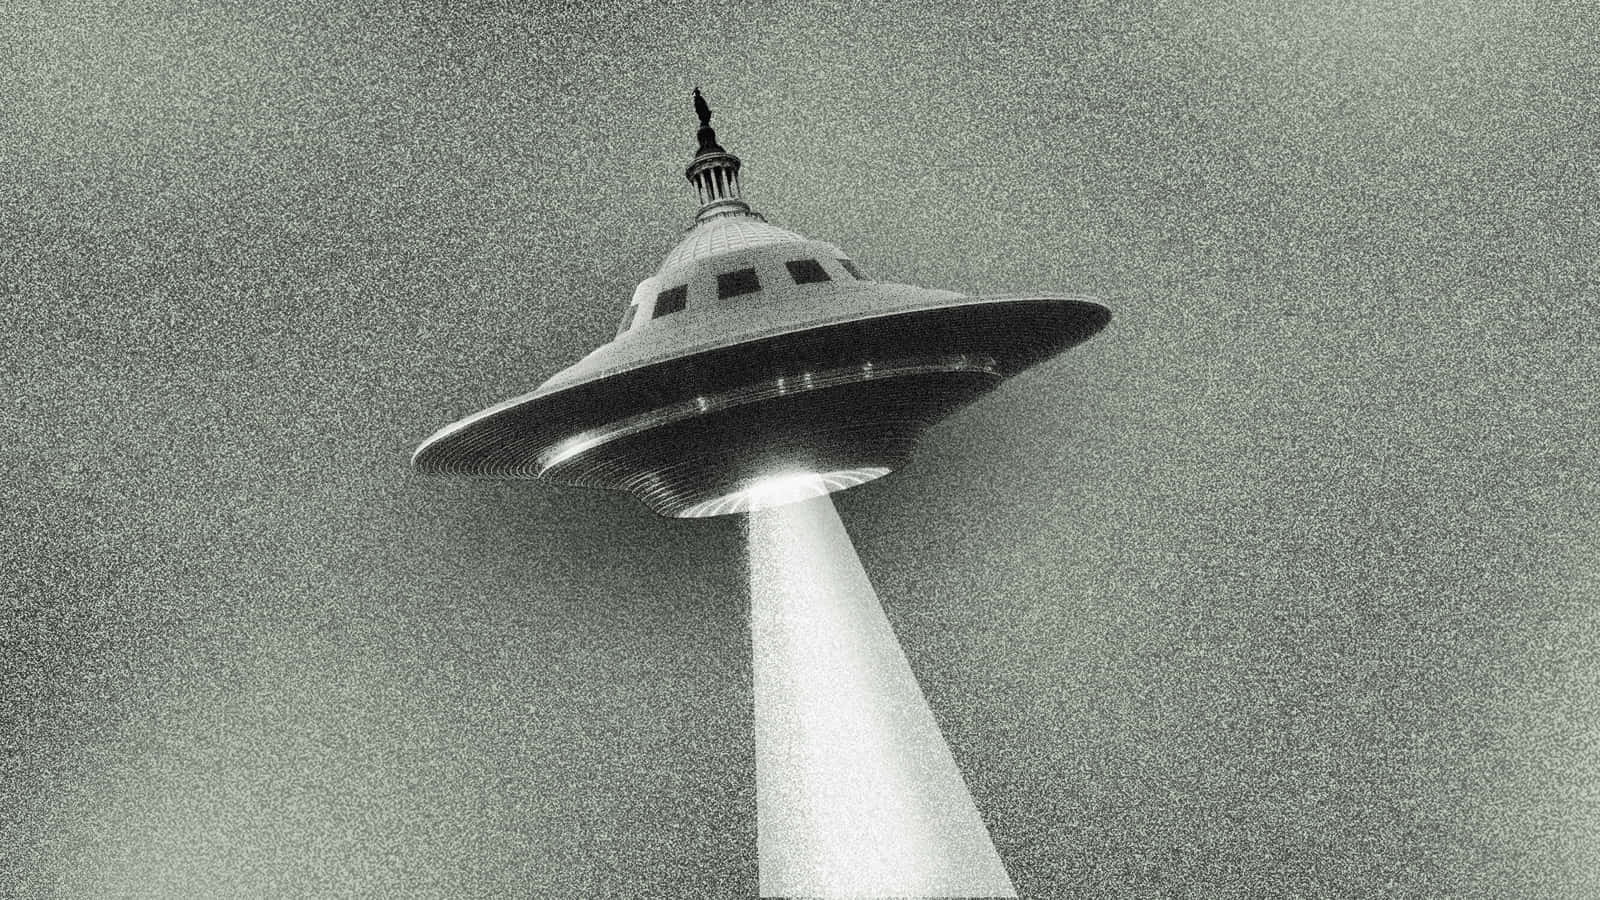 "Futuristic UFO, a sign of a modern world rising."